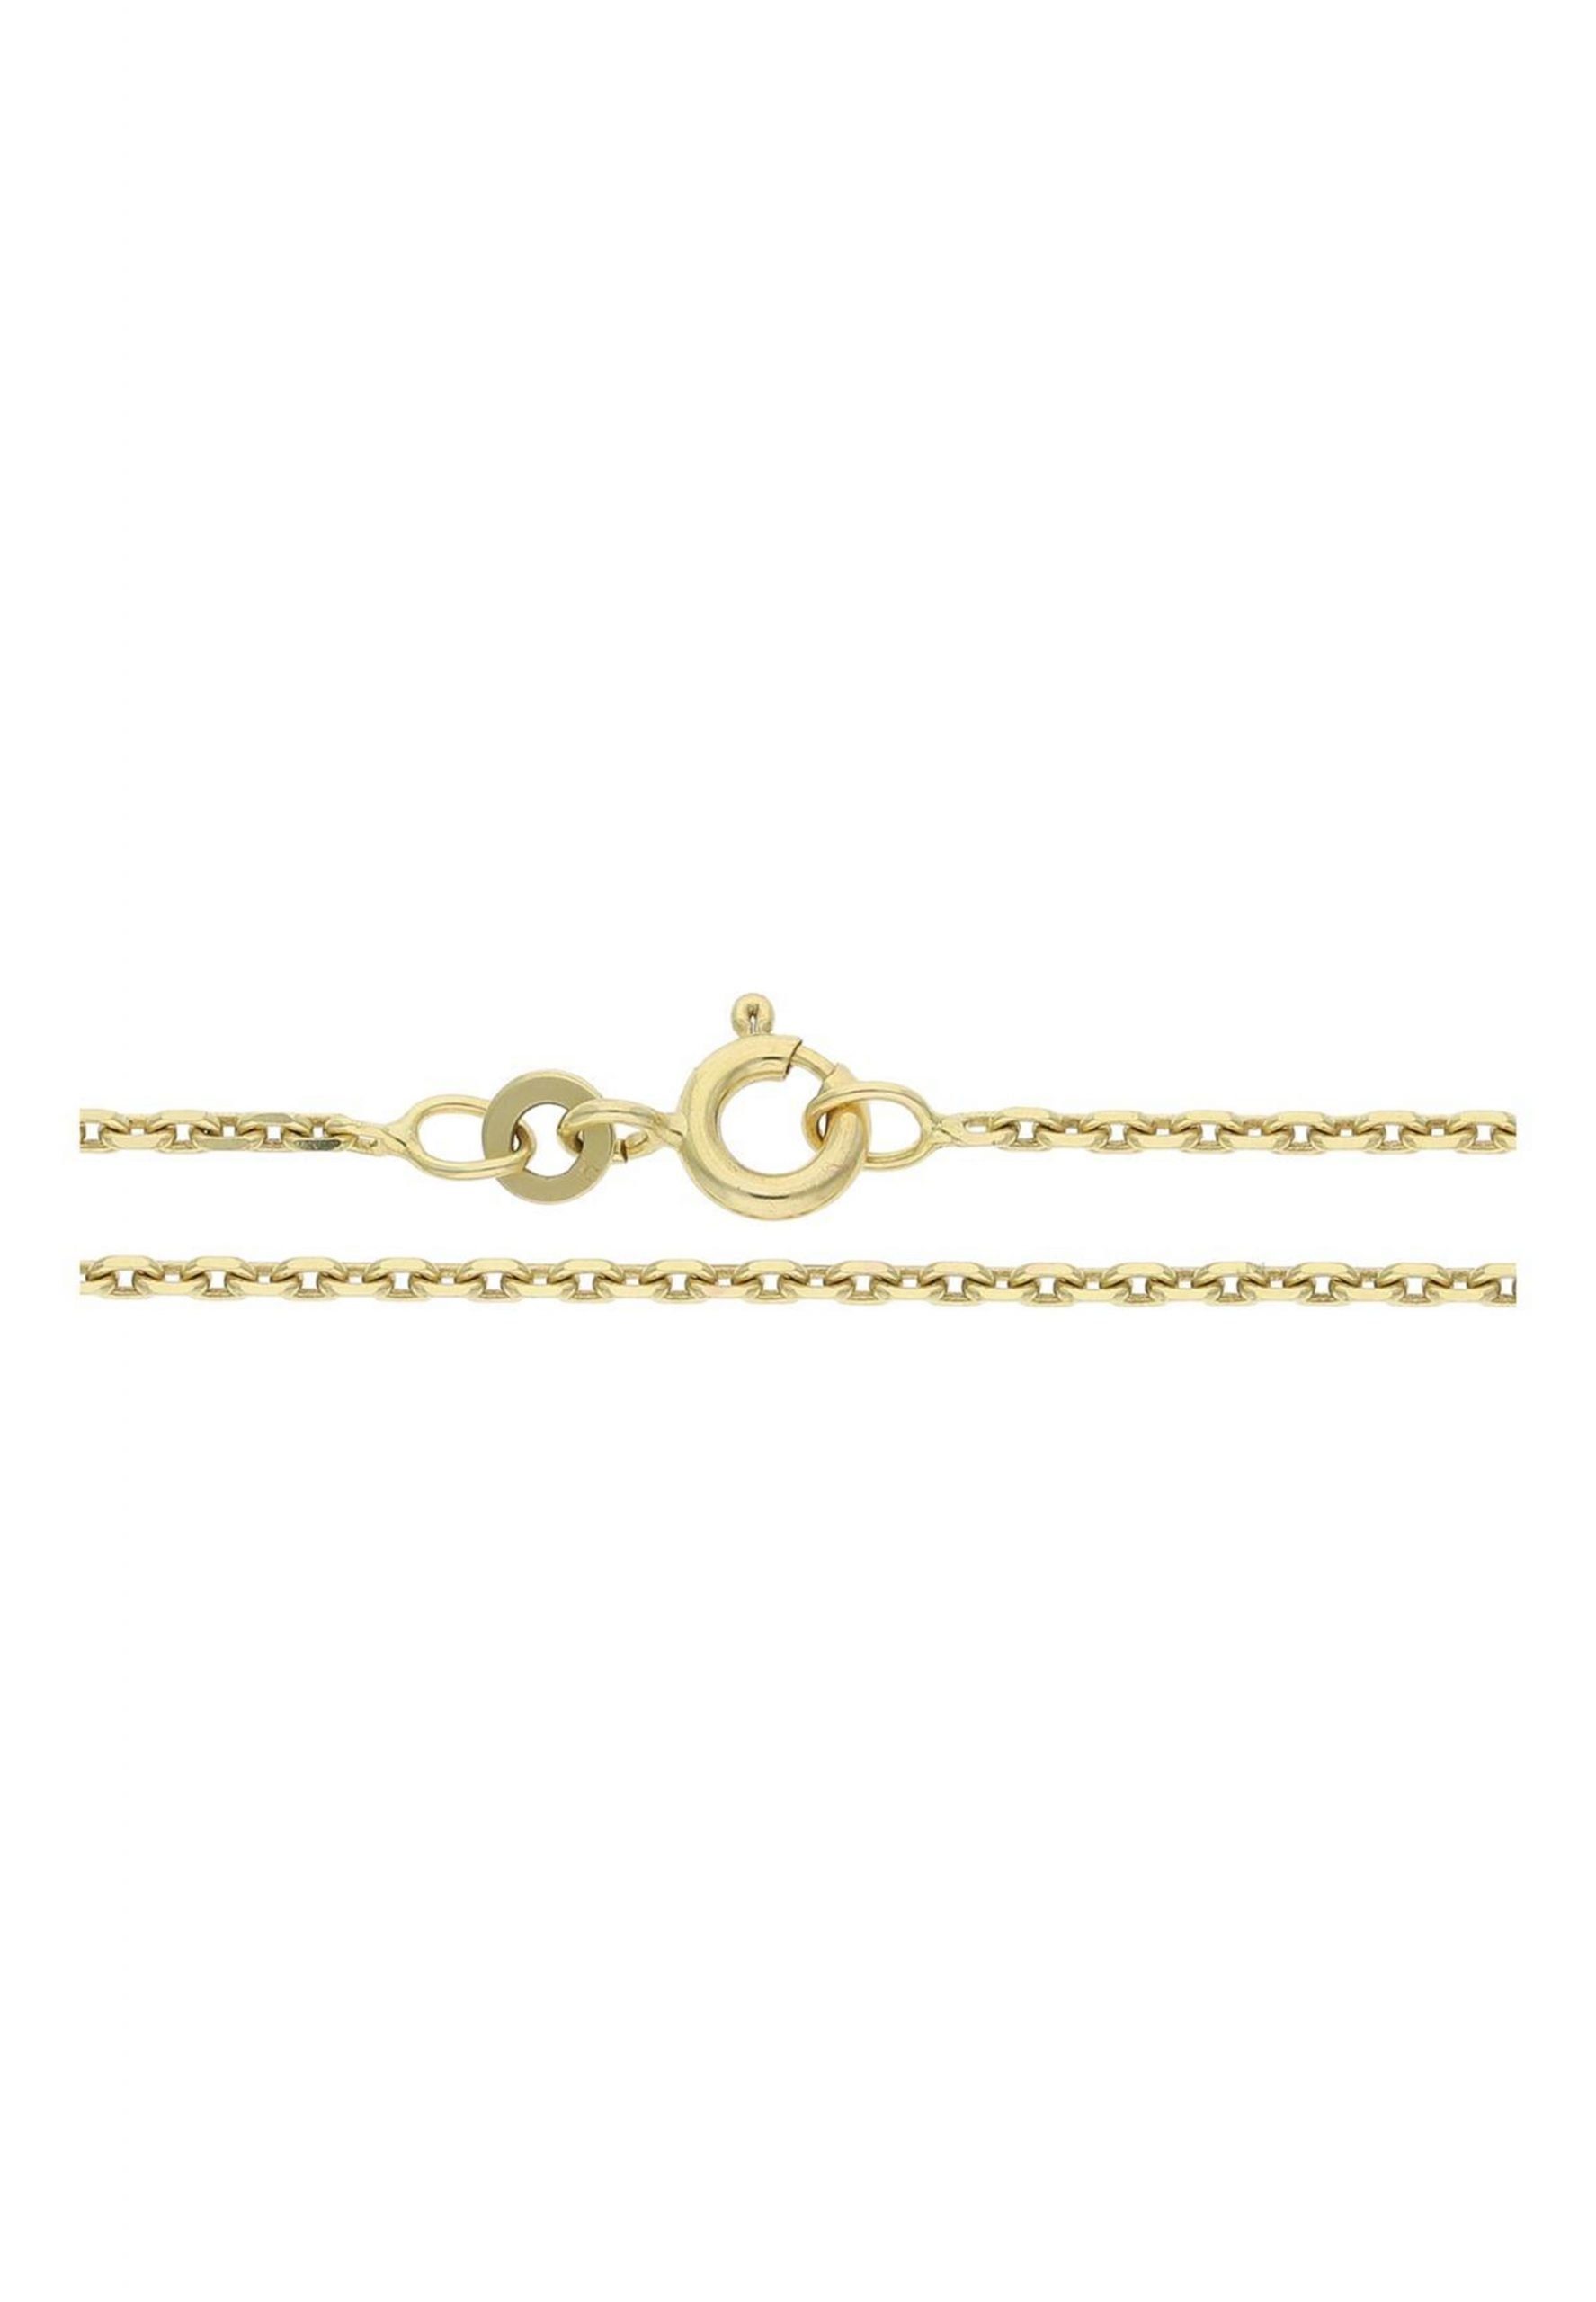 JuwelmaLux cm Goldkette Halskette Gold 333/000, (1-tlg), Schmuckschachtel Gold Ankerkette 38 Damen inkl. Goldkette